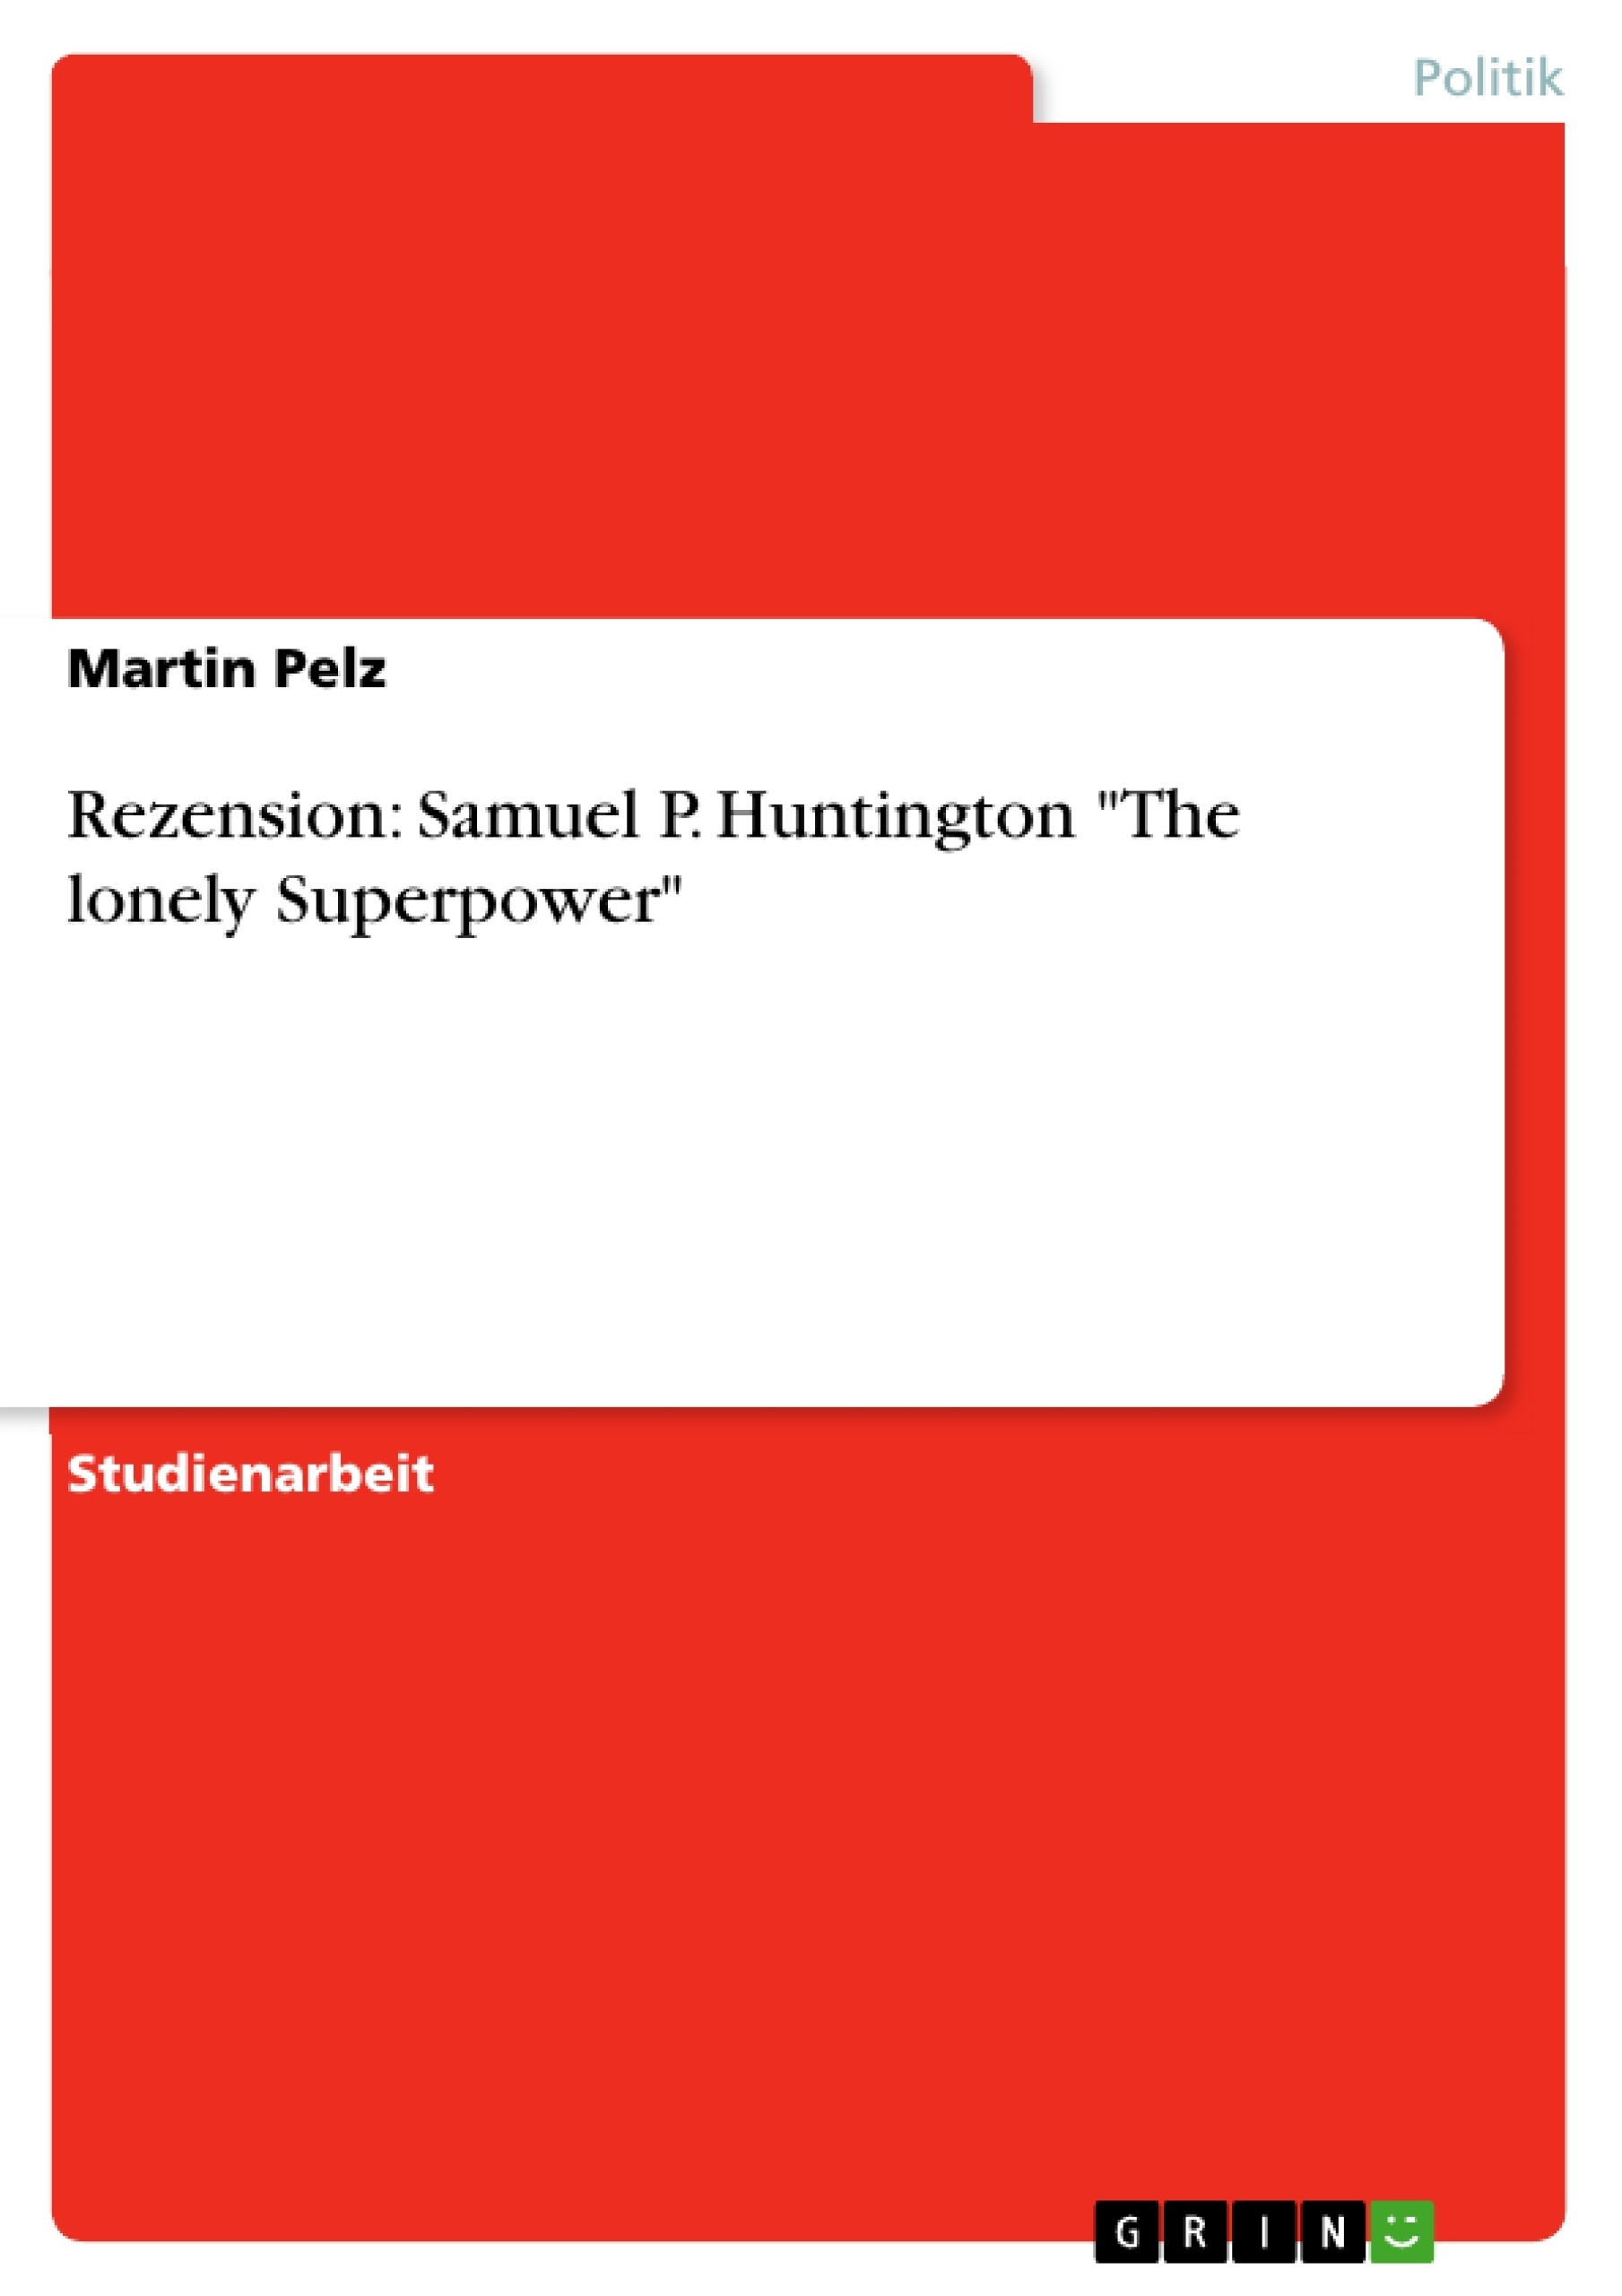 Titel: Rezension: Samuel P. Huntington "The lonely Superpower"